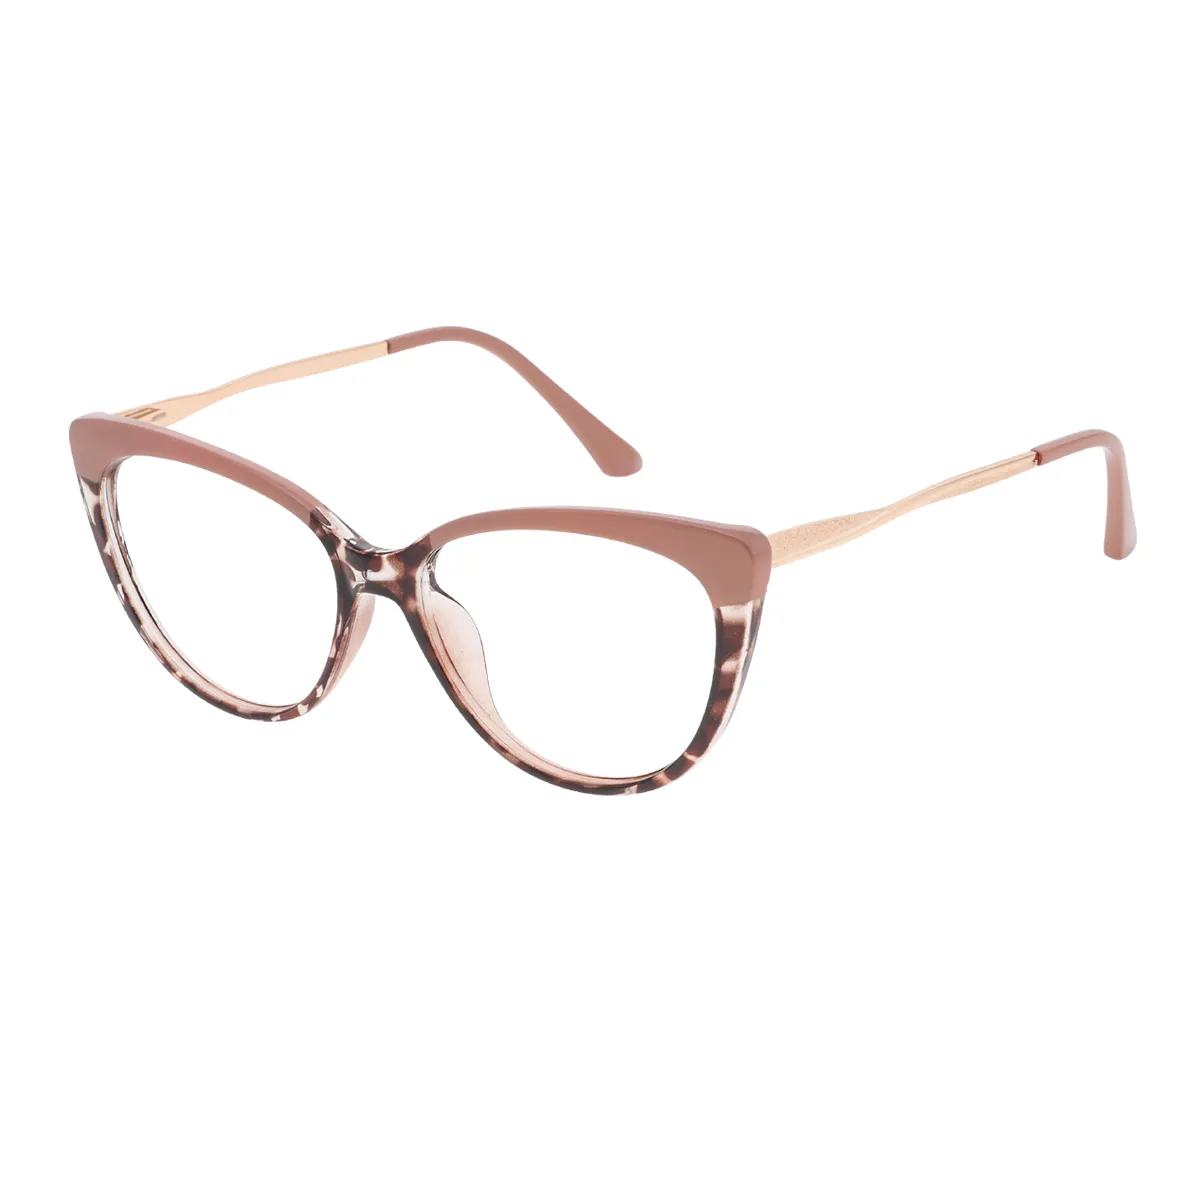 Fashion Cat-eye Translucent-pink Glasses for Women